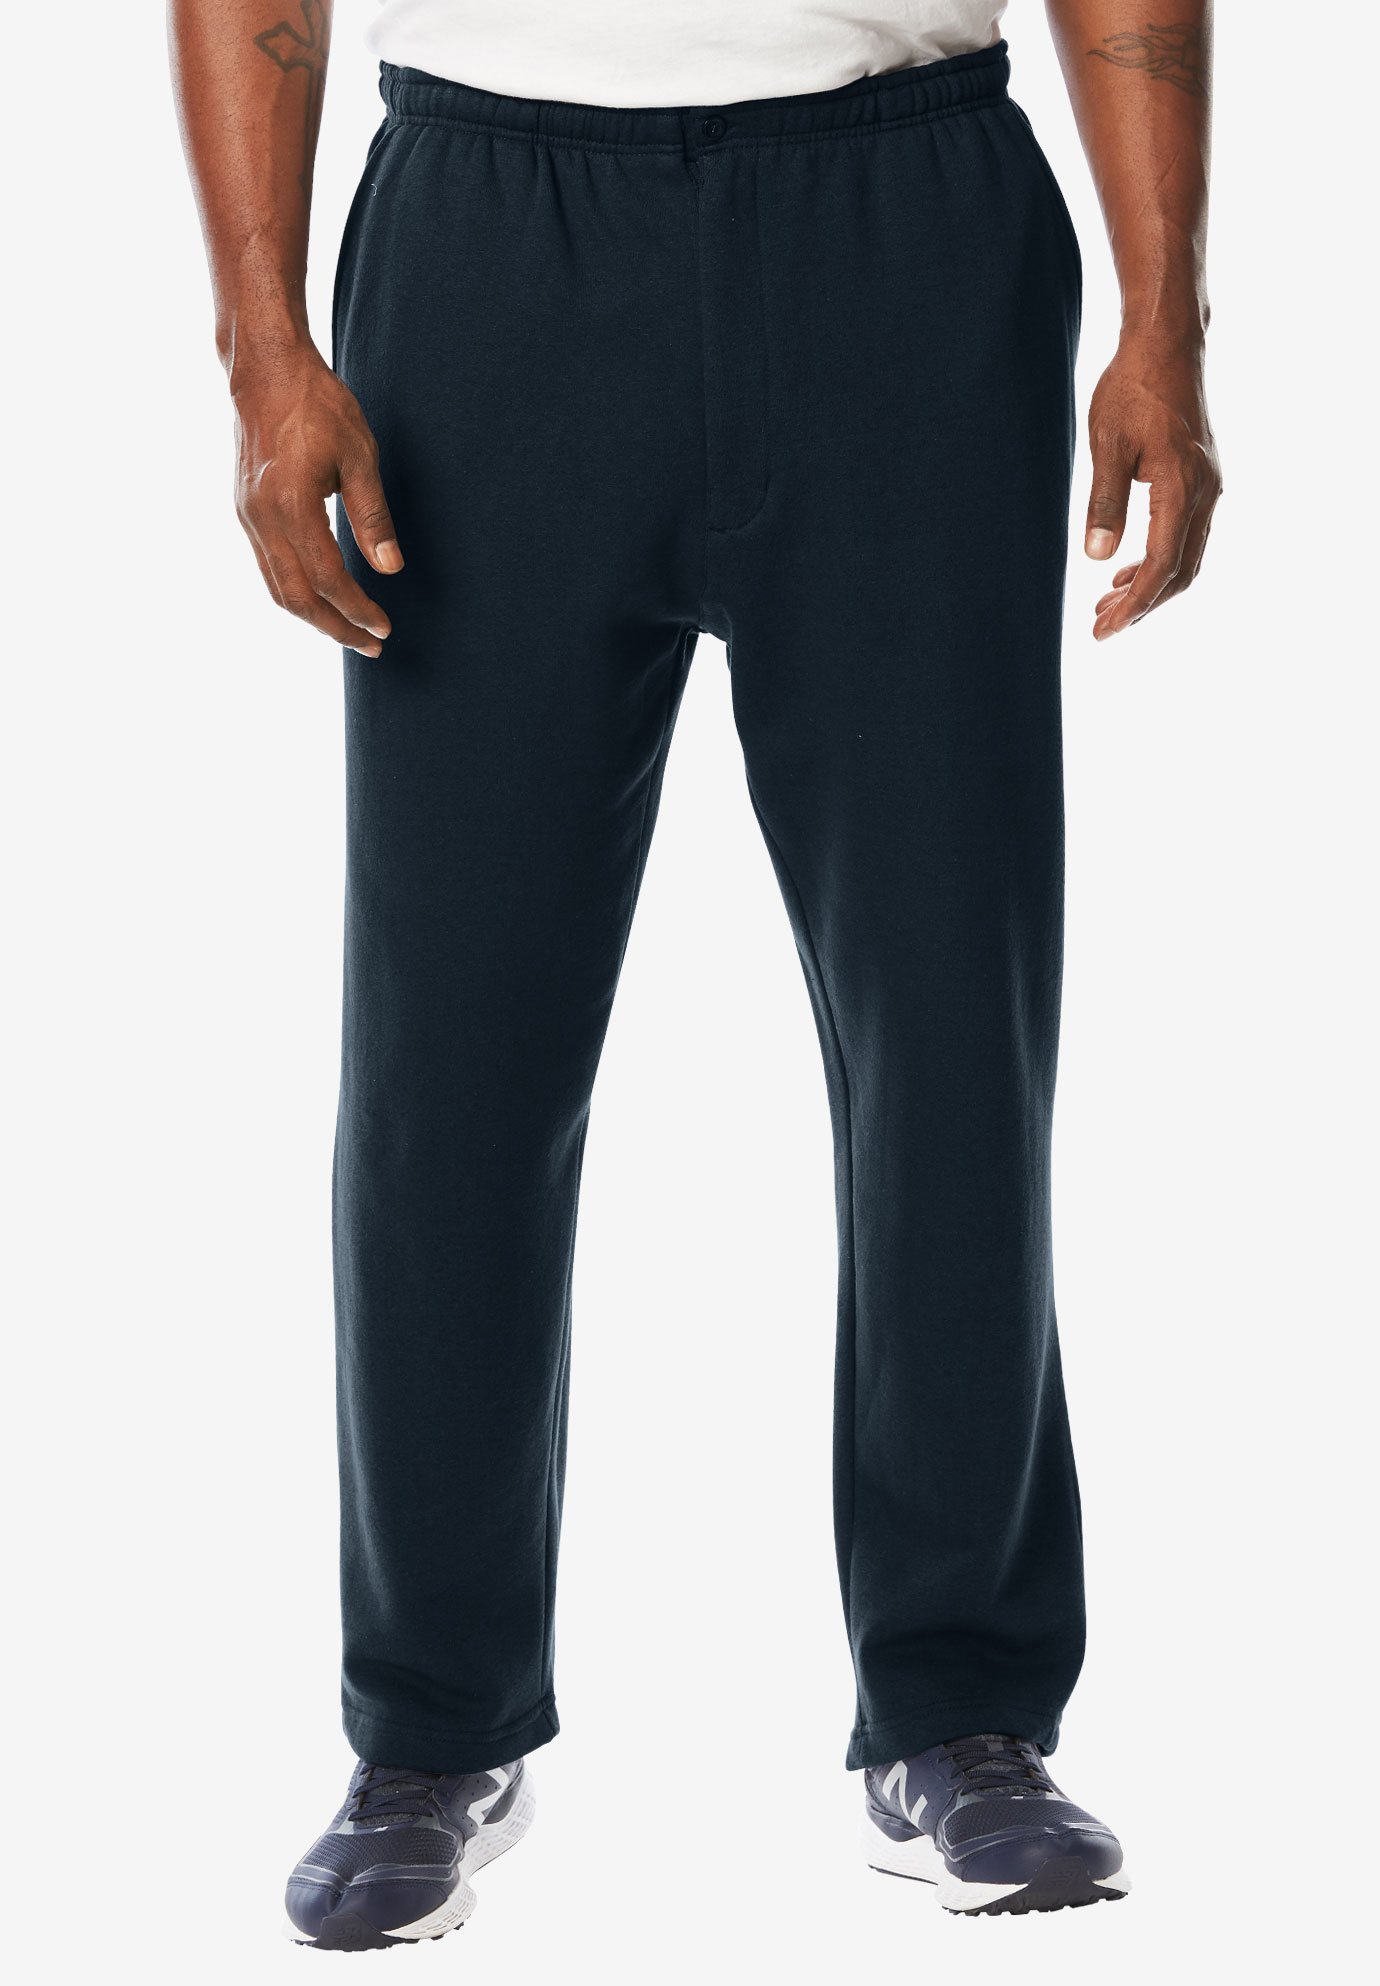 Fleece Zip Fly Pants| Big and Tall All Pants | King Size